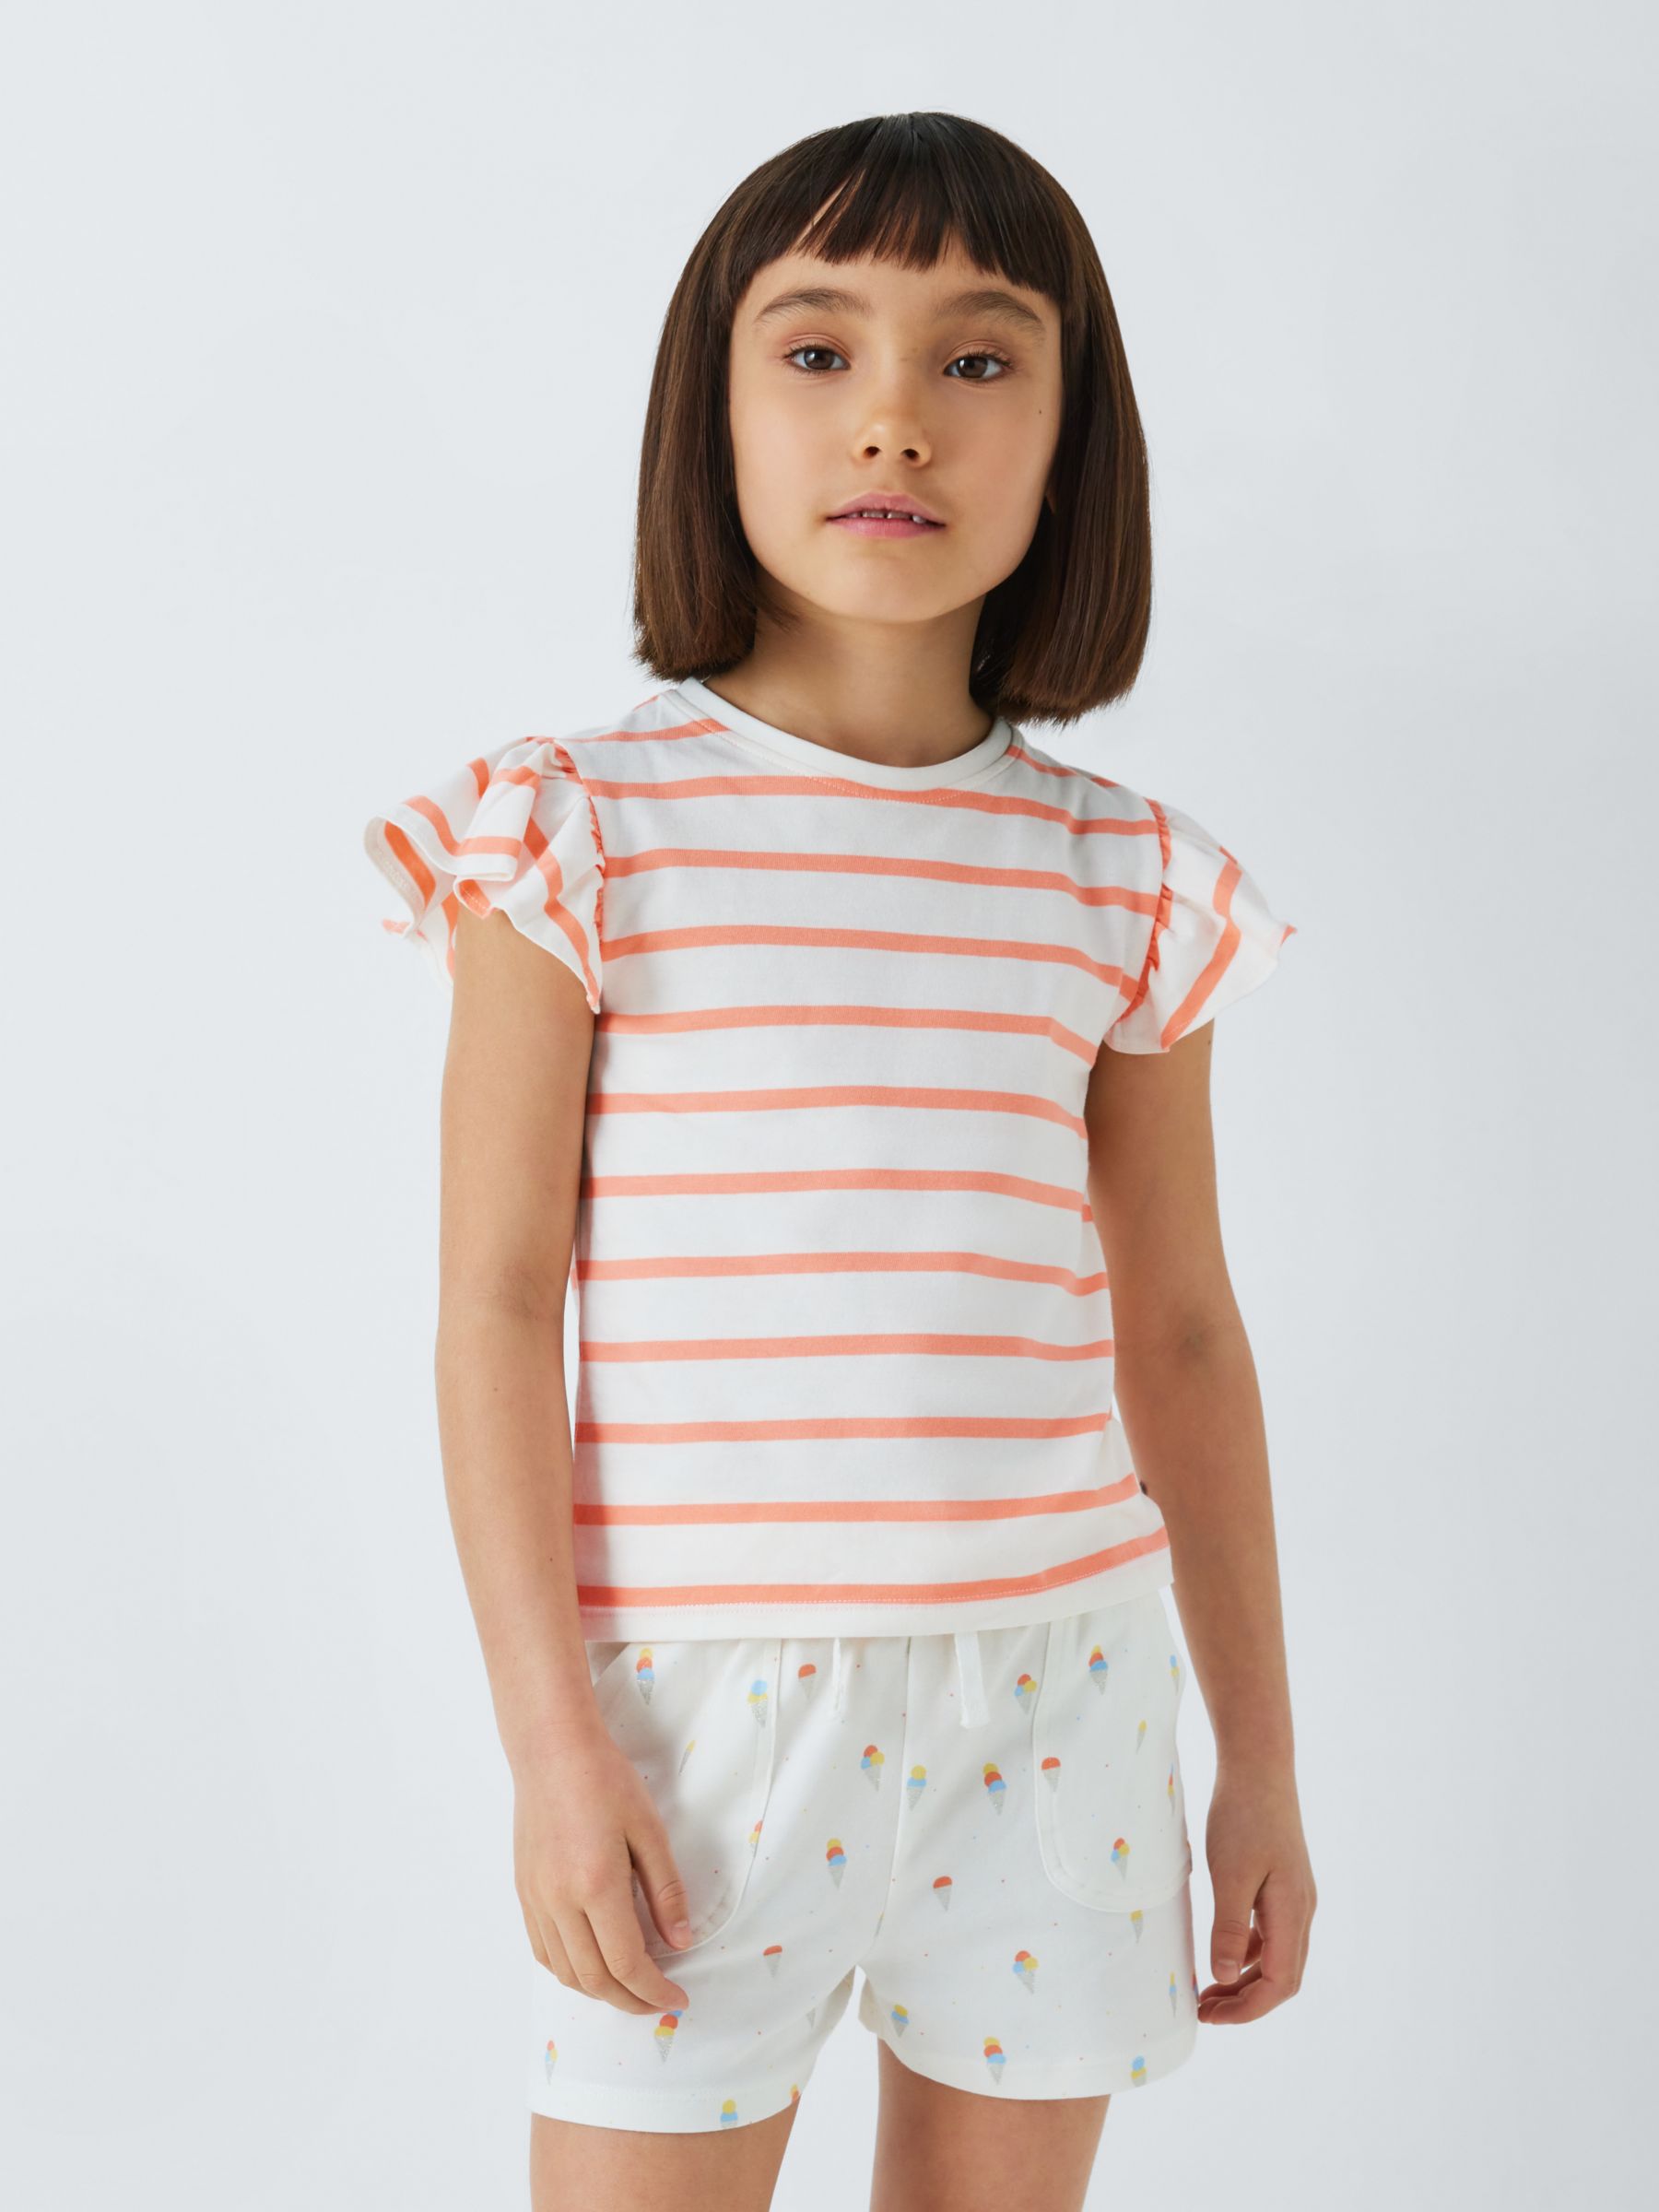 Buy John Lewis Kids' Plain/Stripe/Ice Cream Frill Sleeve T-Shirts, Pack of 3, Multi Online at johnlewis.com